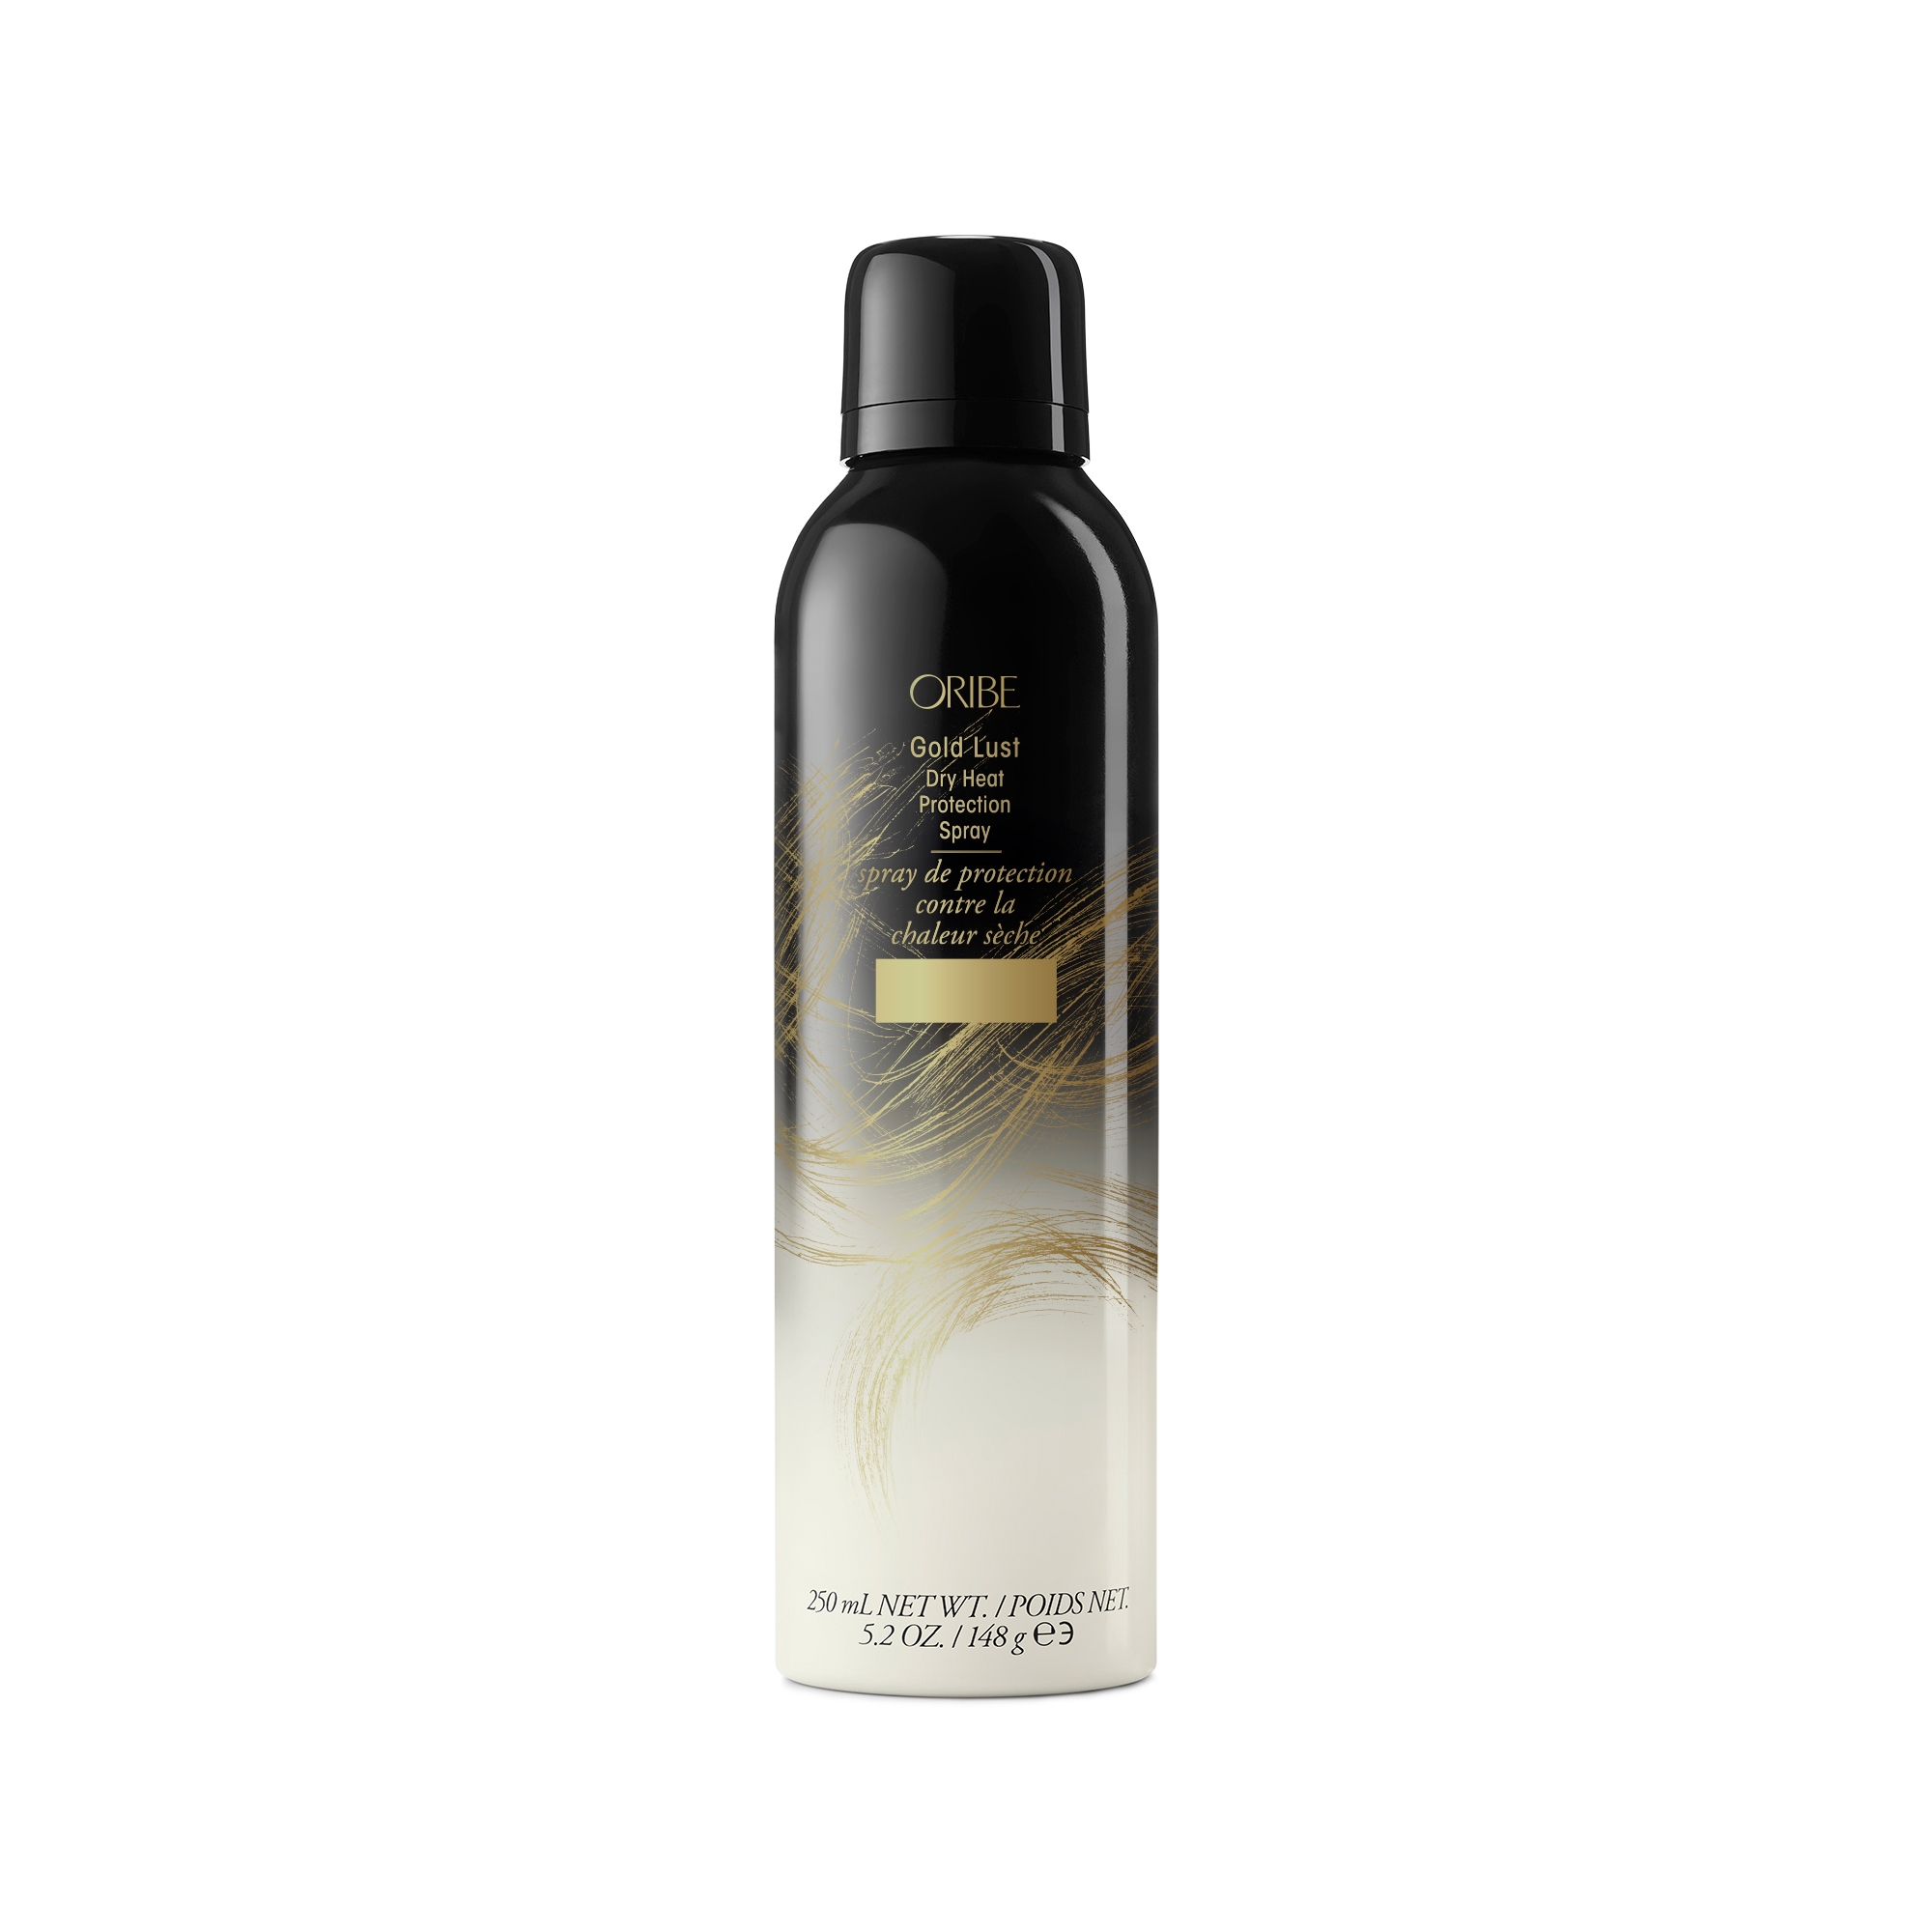 Produktbild von Oribe Care - Gold Lust Dry Heat Protection Spray